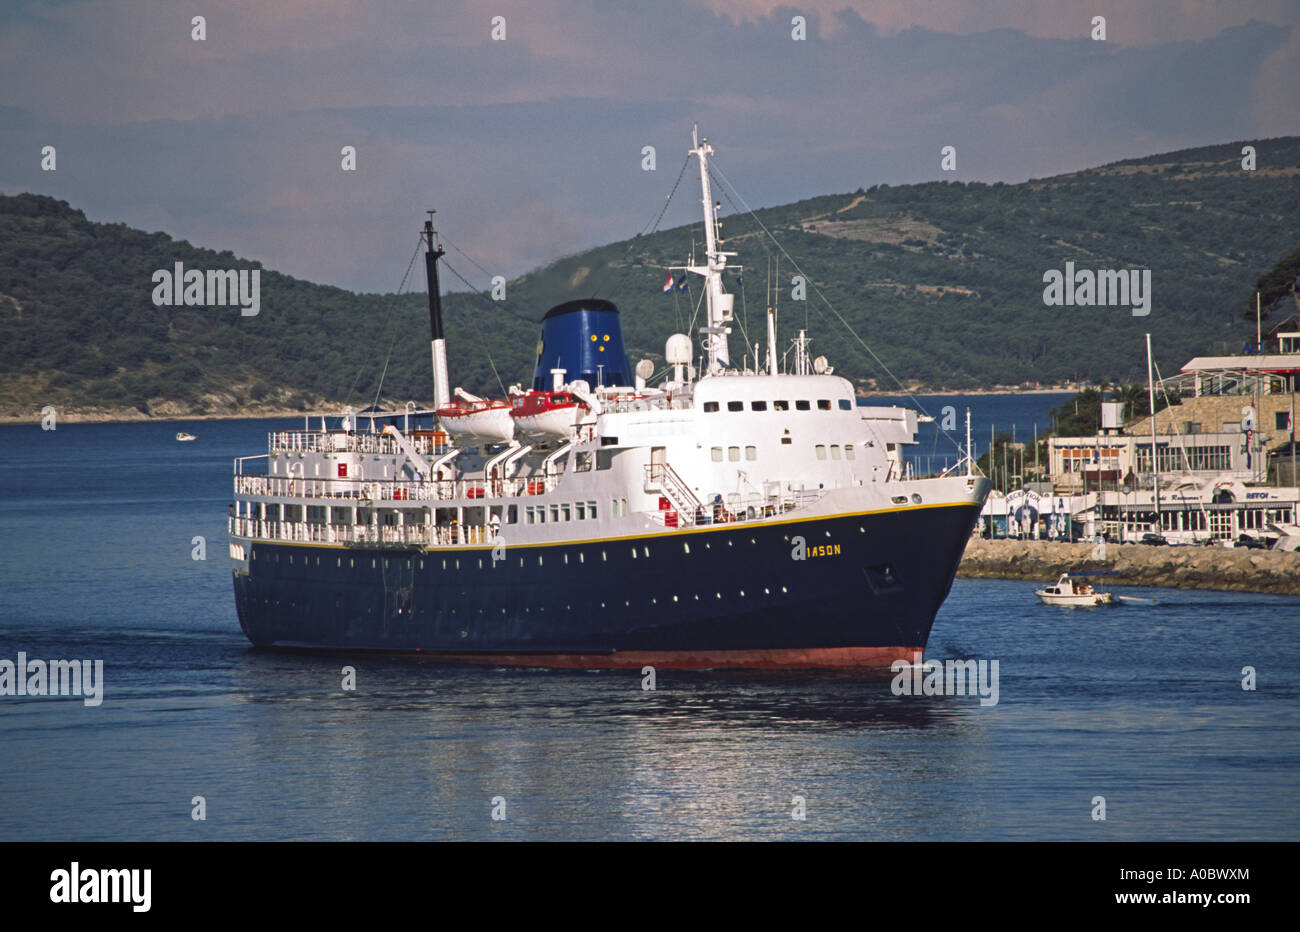 The Greek cruise ship Jason  enters the port of Split in Croatia. Stock Photo